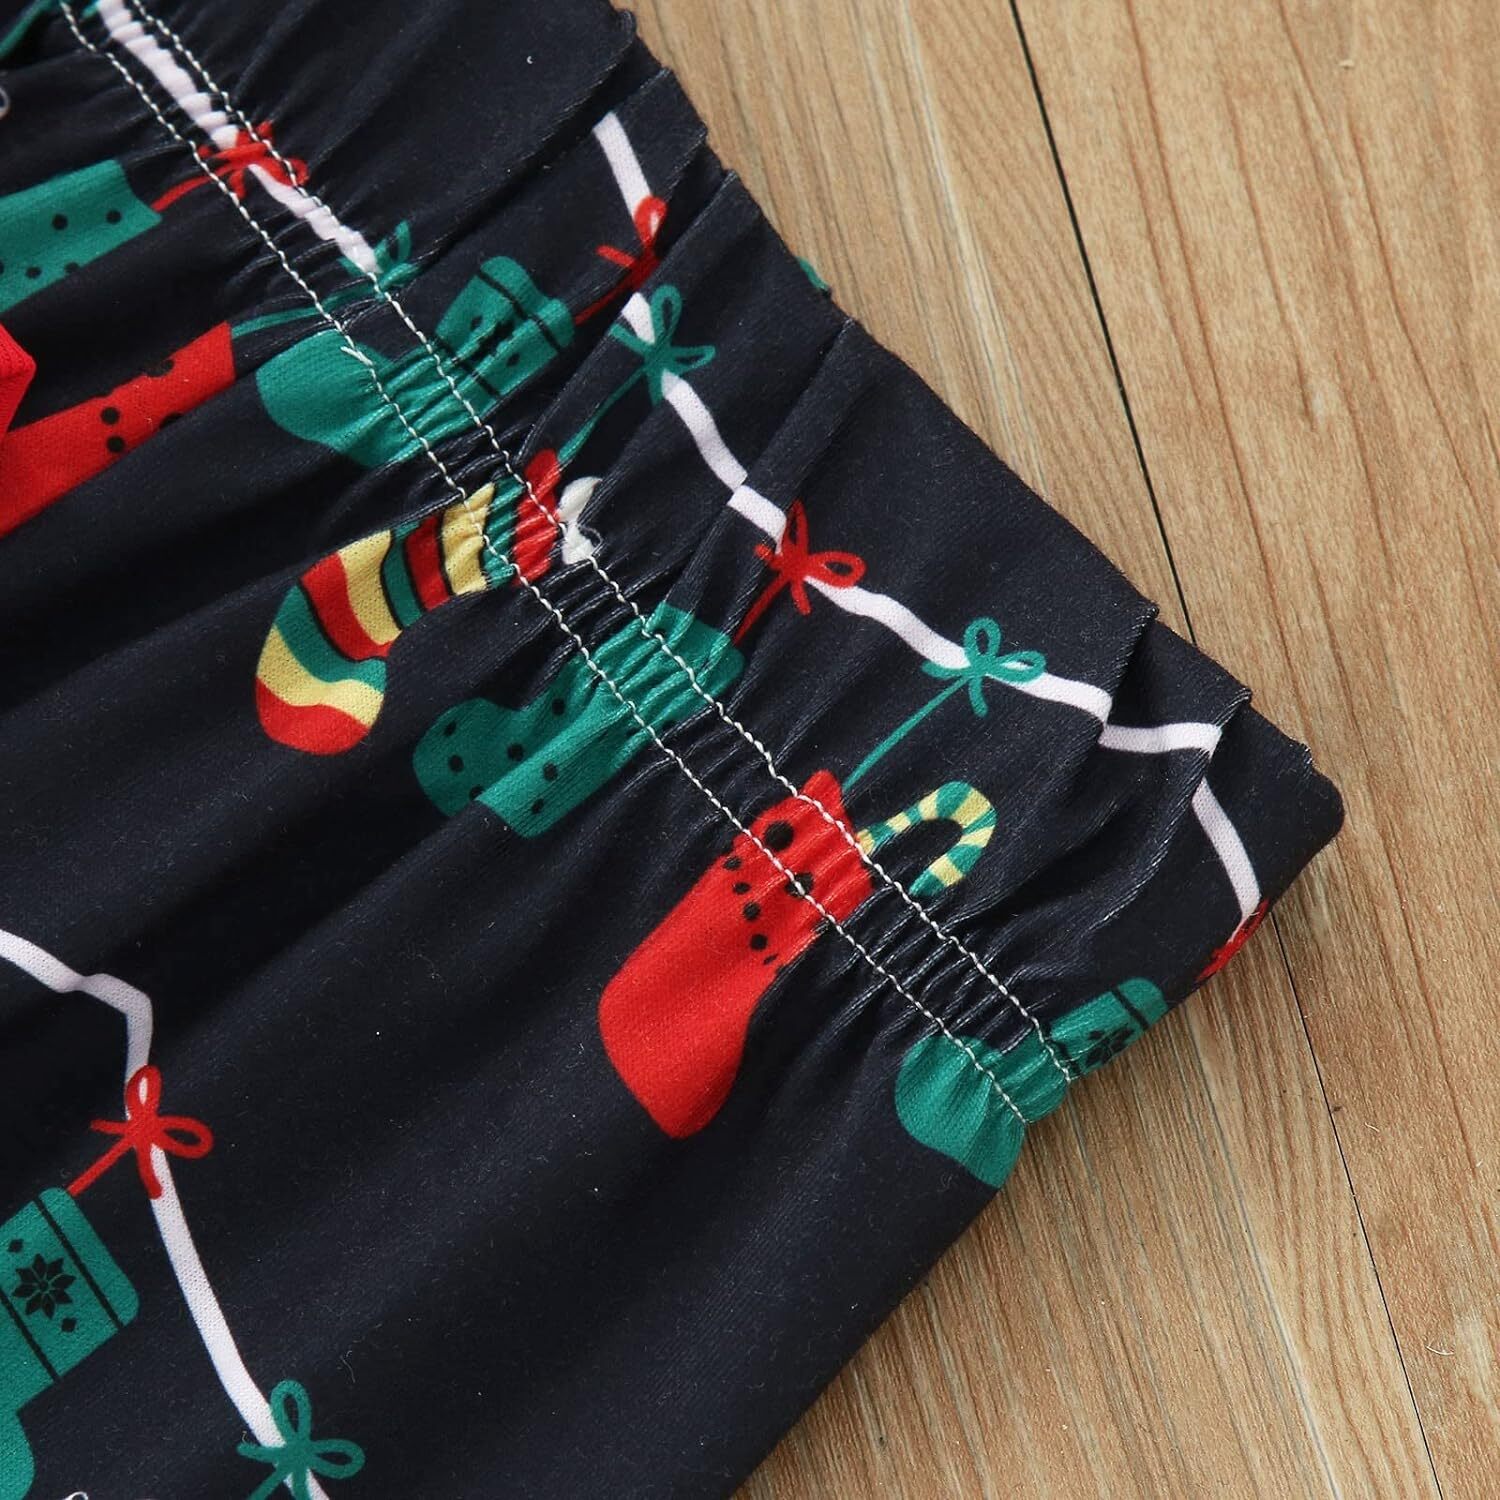 Black Christmas Light Bulb Fmalily Matching Pajamas Sets (with Pet's dog clothes)